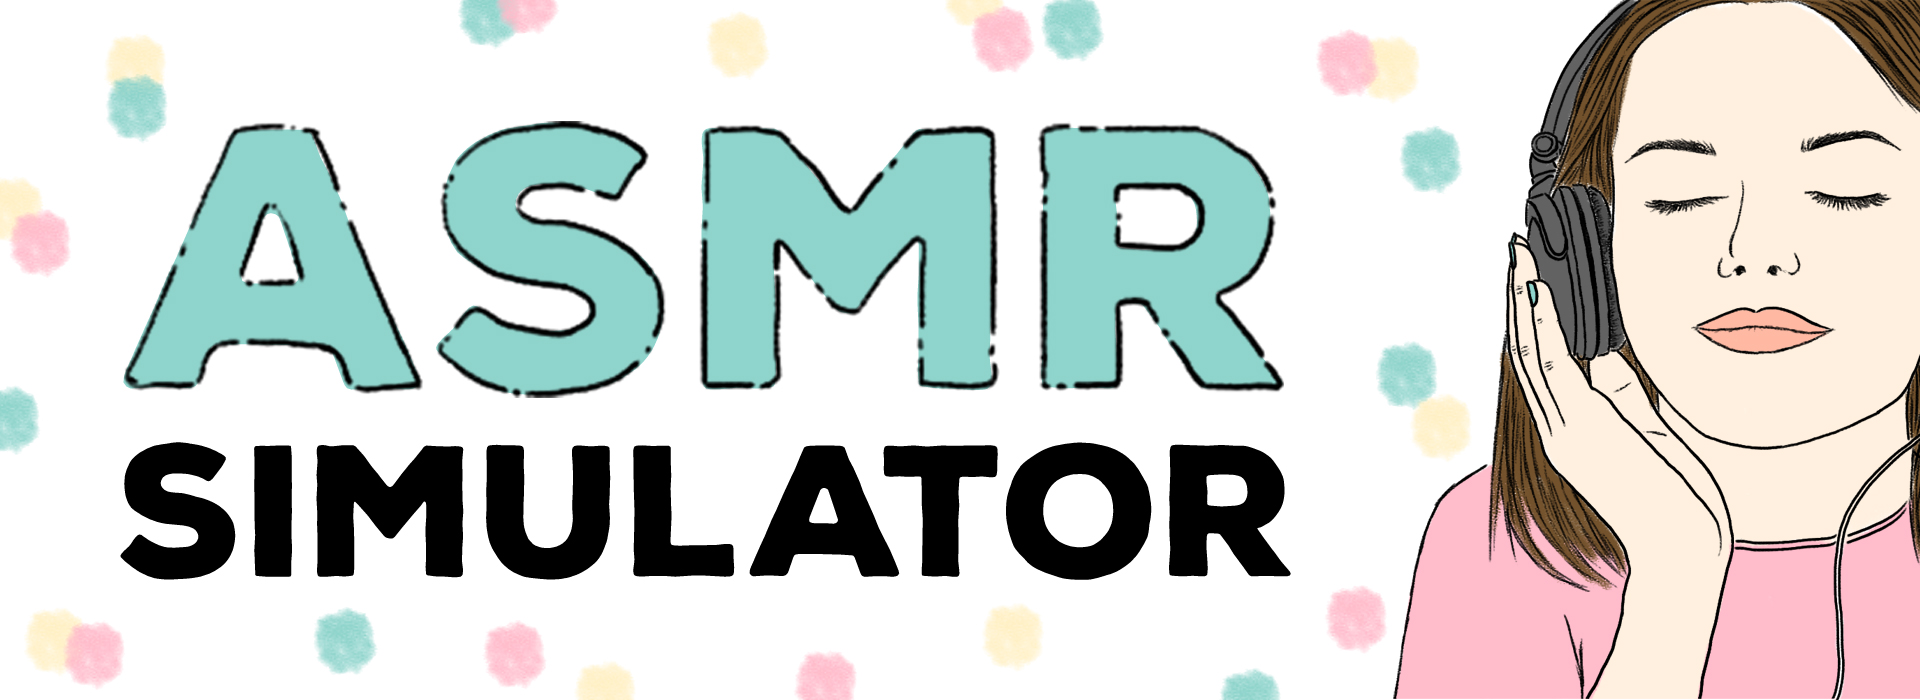 ASMR Simulator